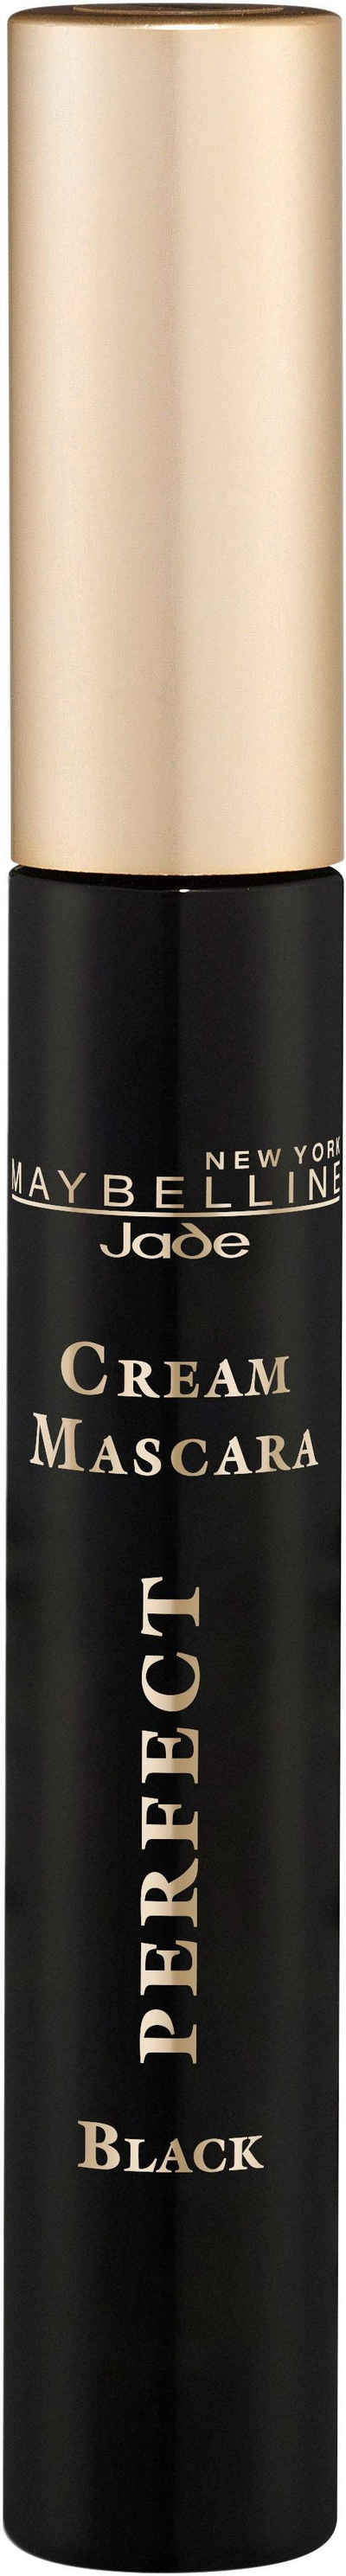 MAYBELLINE NEW YORK Mascara »Cream Mascara«, Mit pflegendem Protein